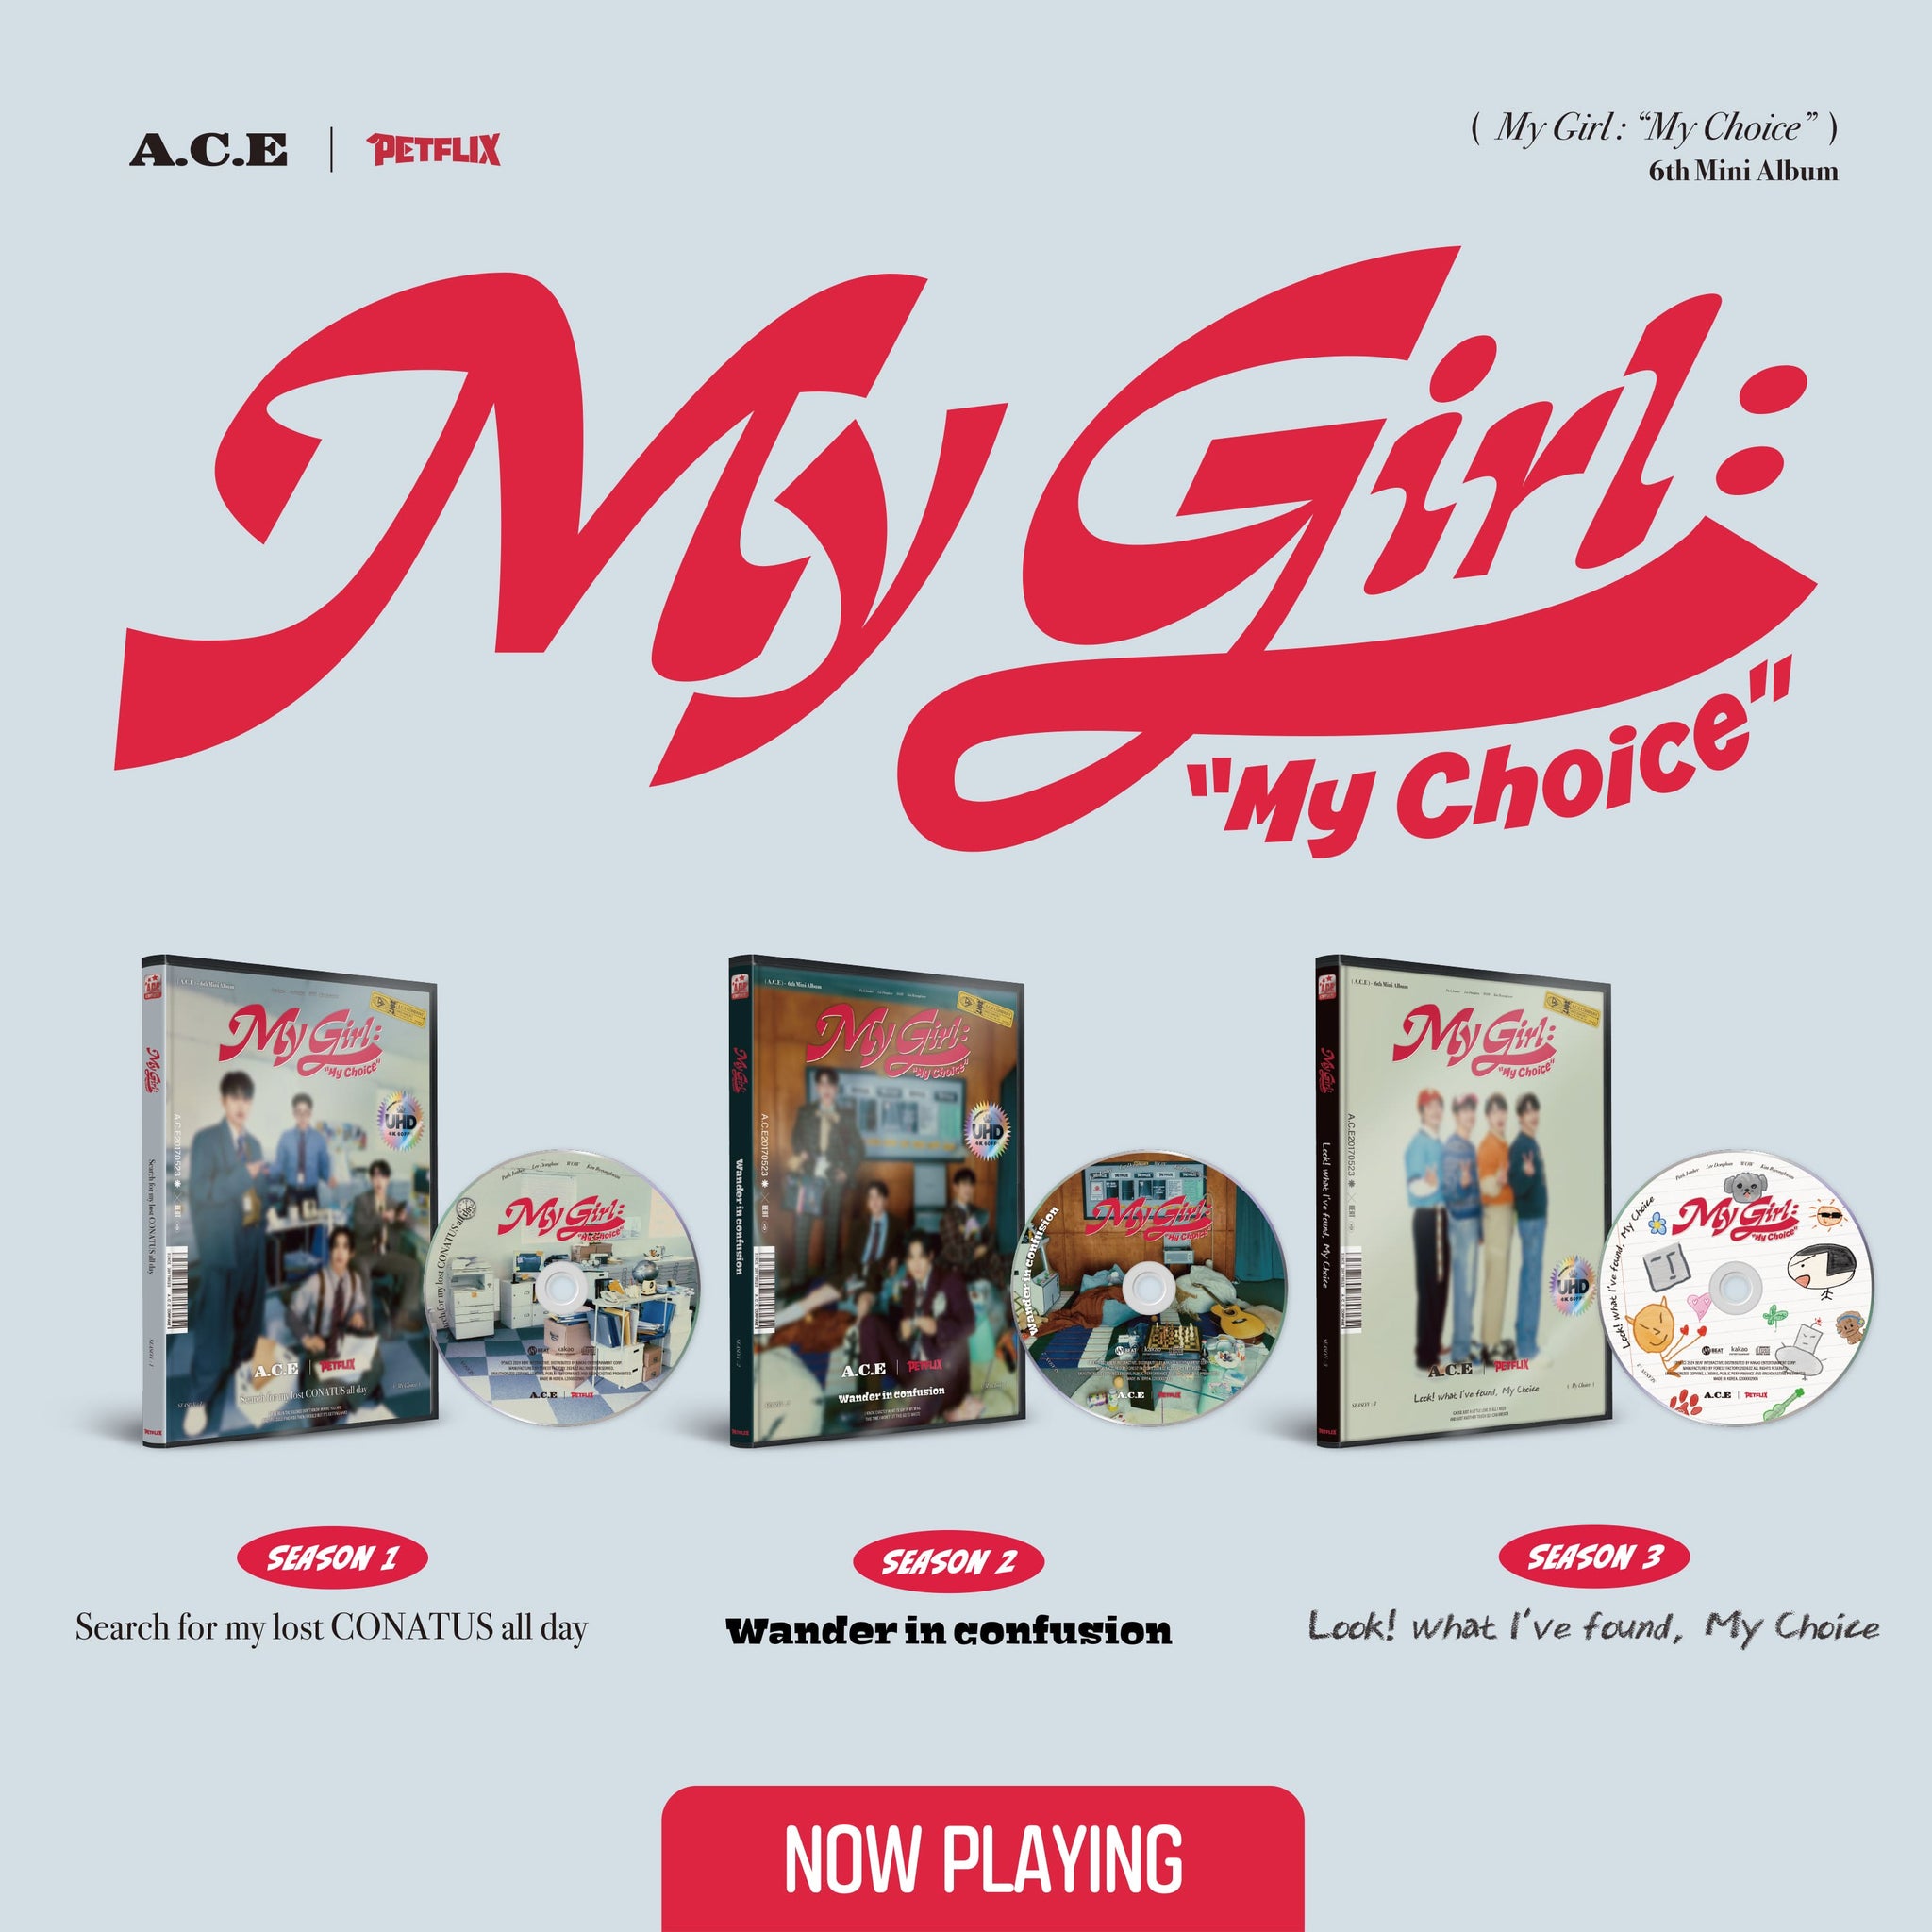 A.C.E [My Girl : My Choice] 6th Mini Album